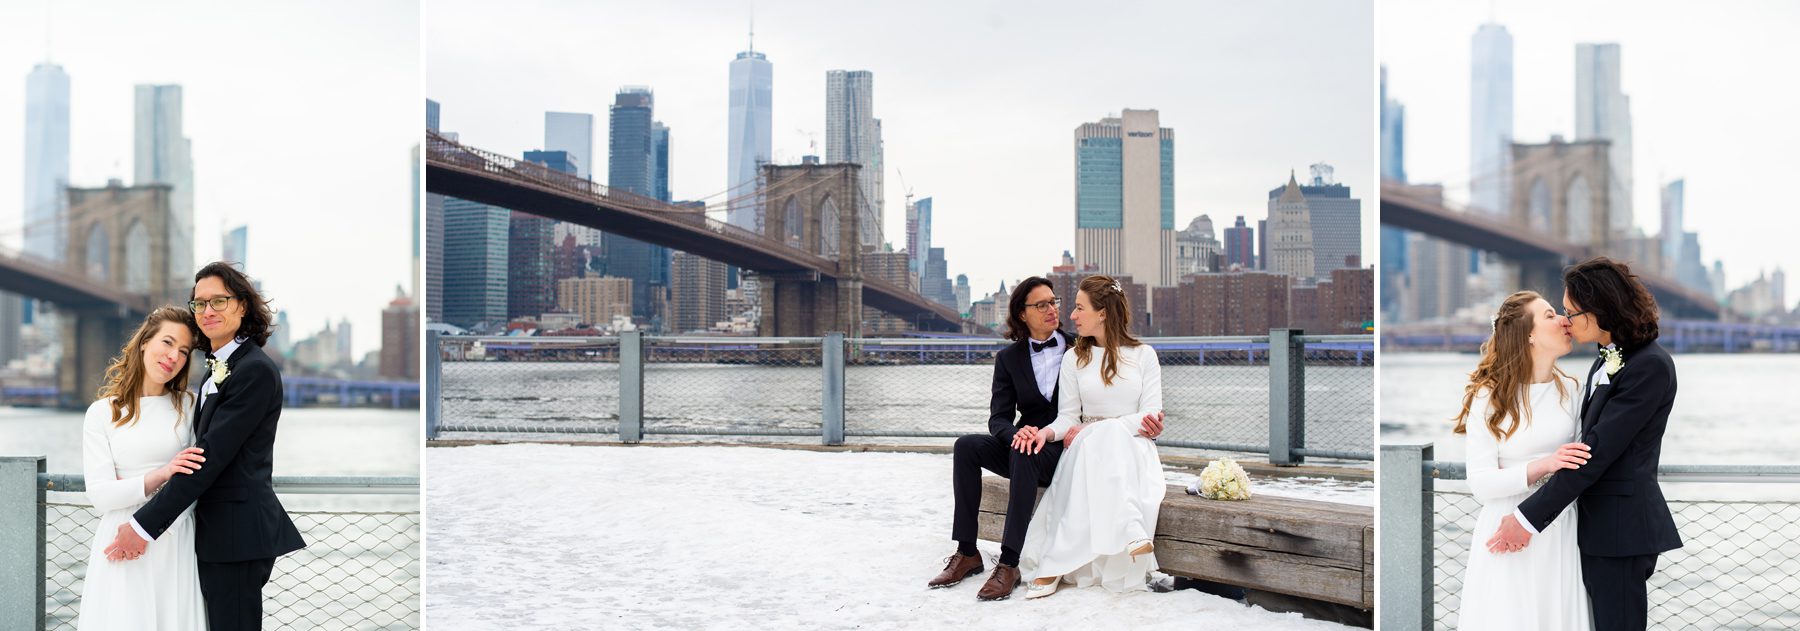 Brooklyn Bridge Park Winter Wedding